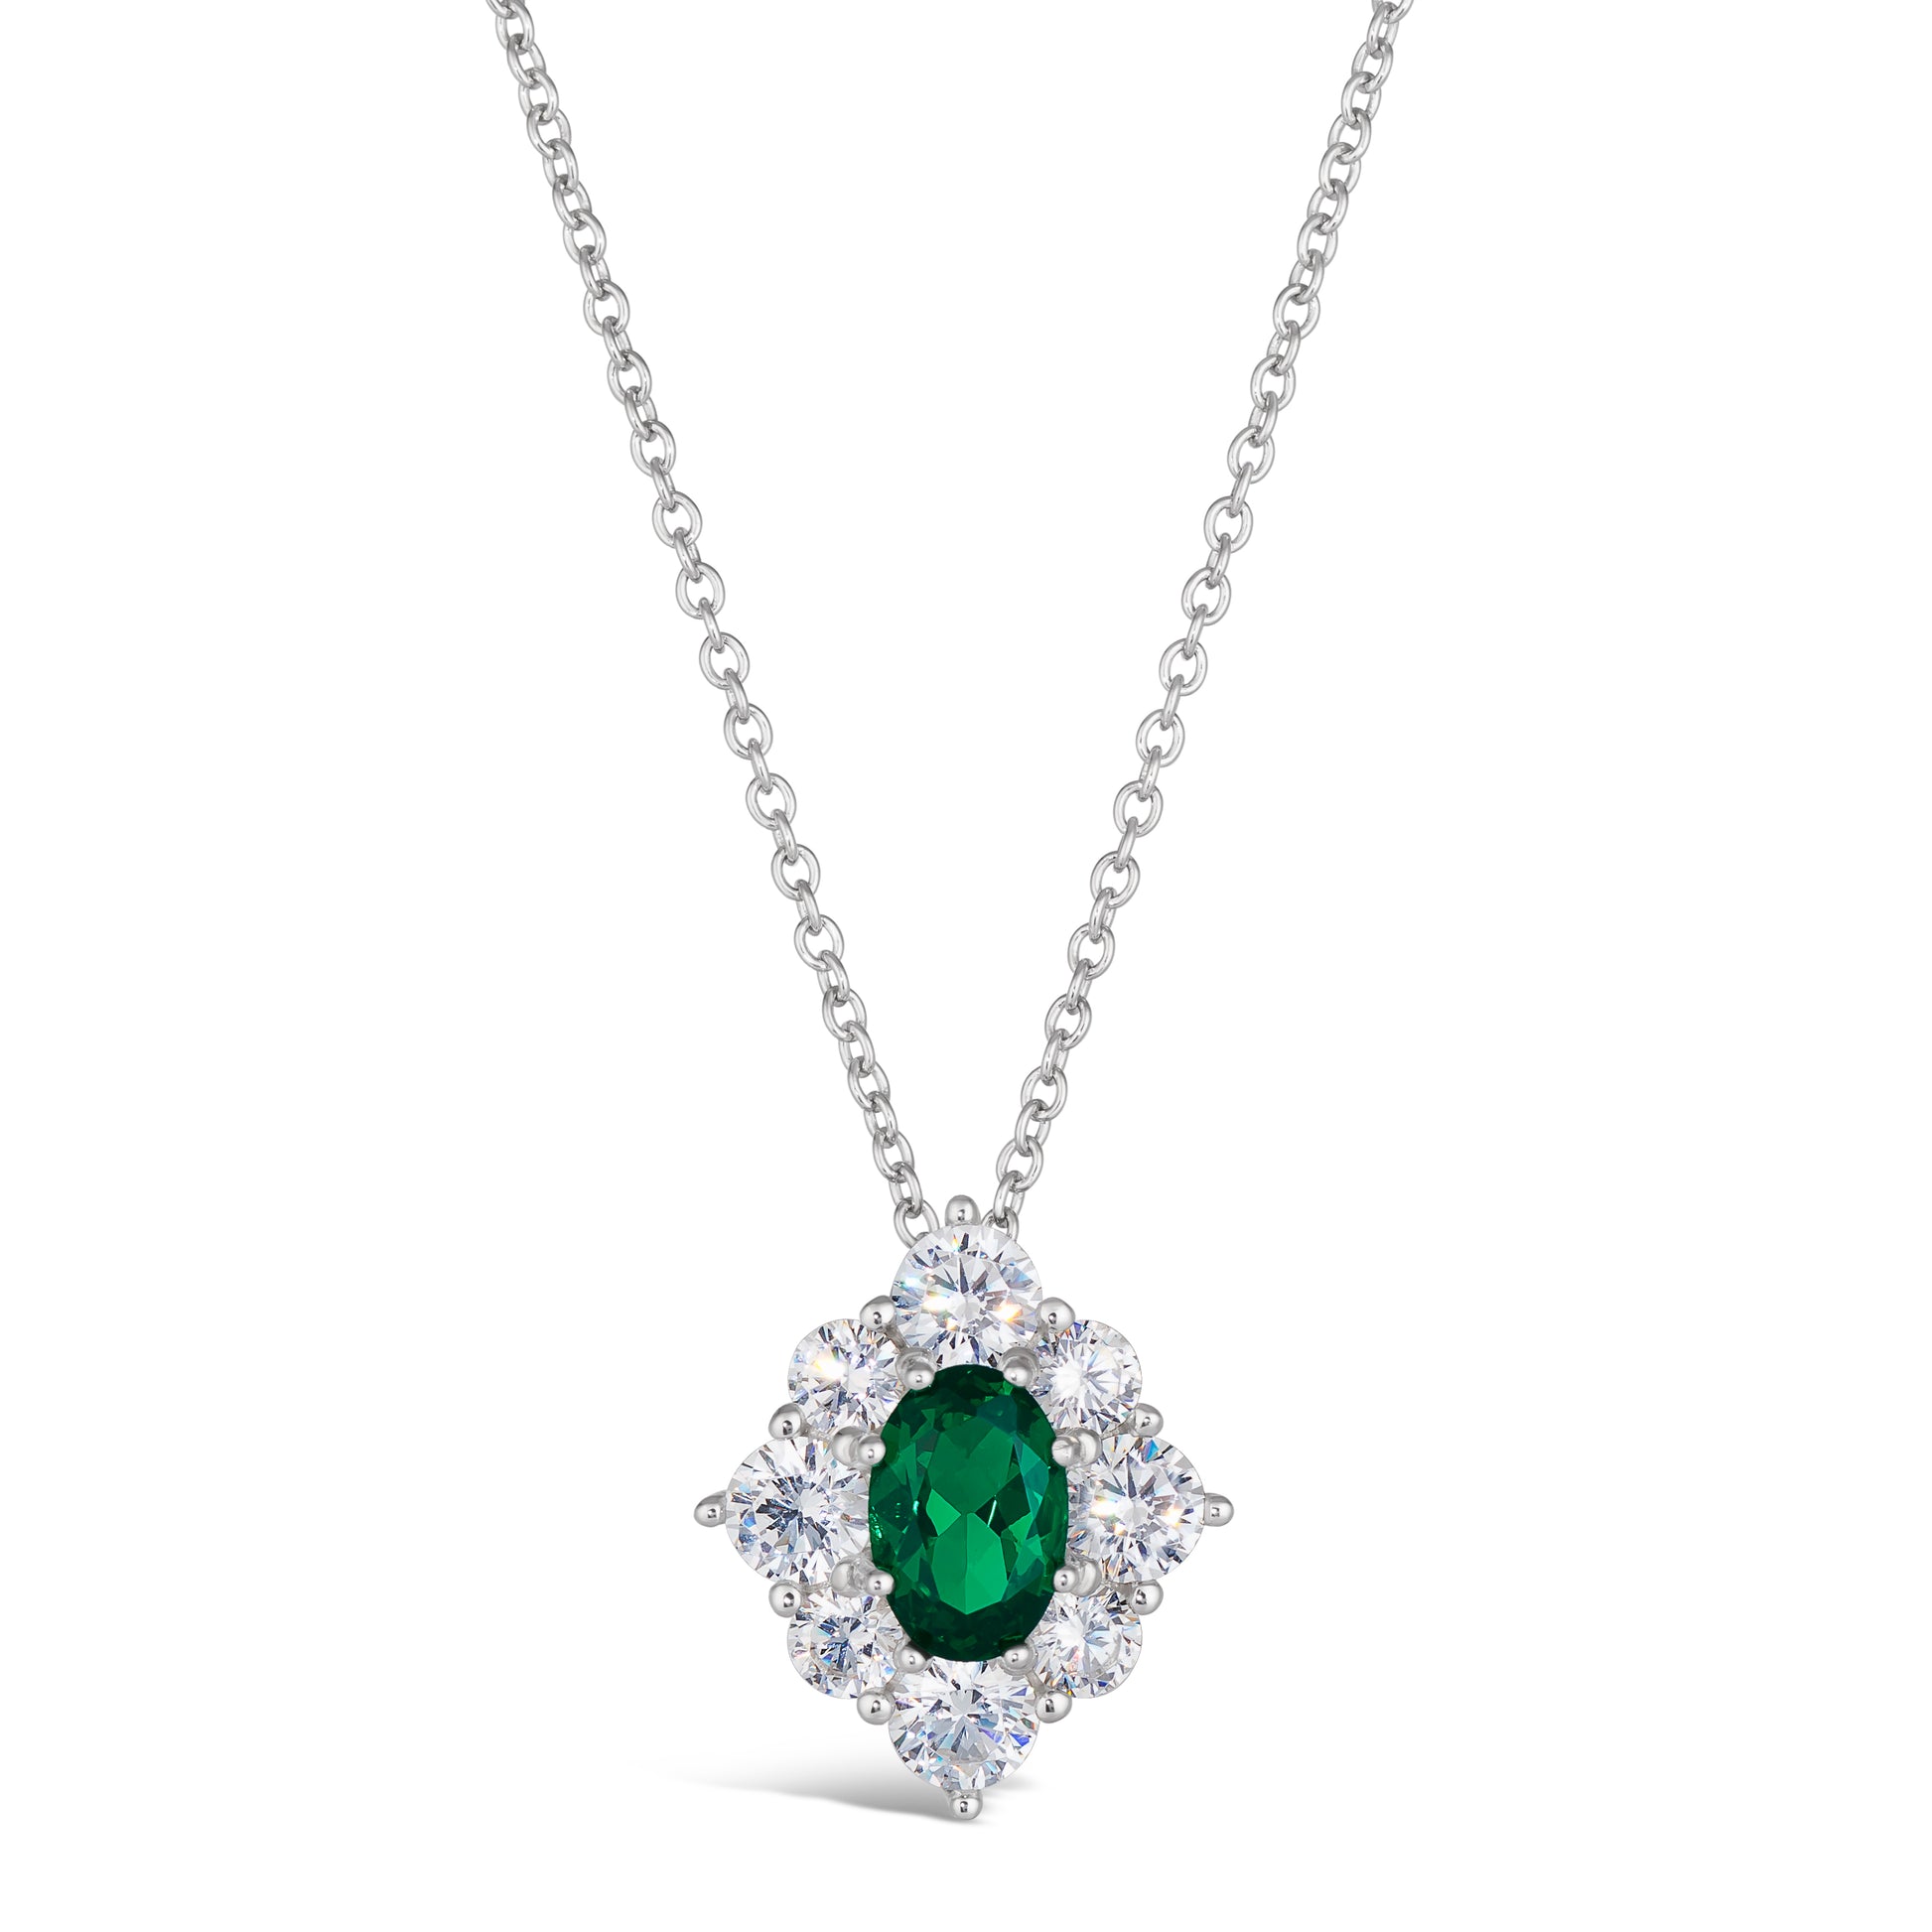 Victoria 39 Necklace Crystalline oval in a halo - Anna Zuckerman Luxury Necklaces